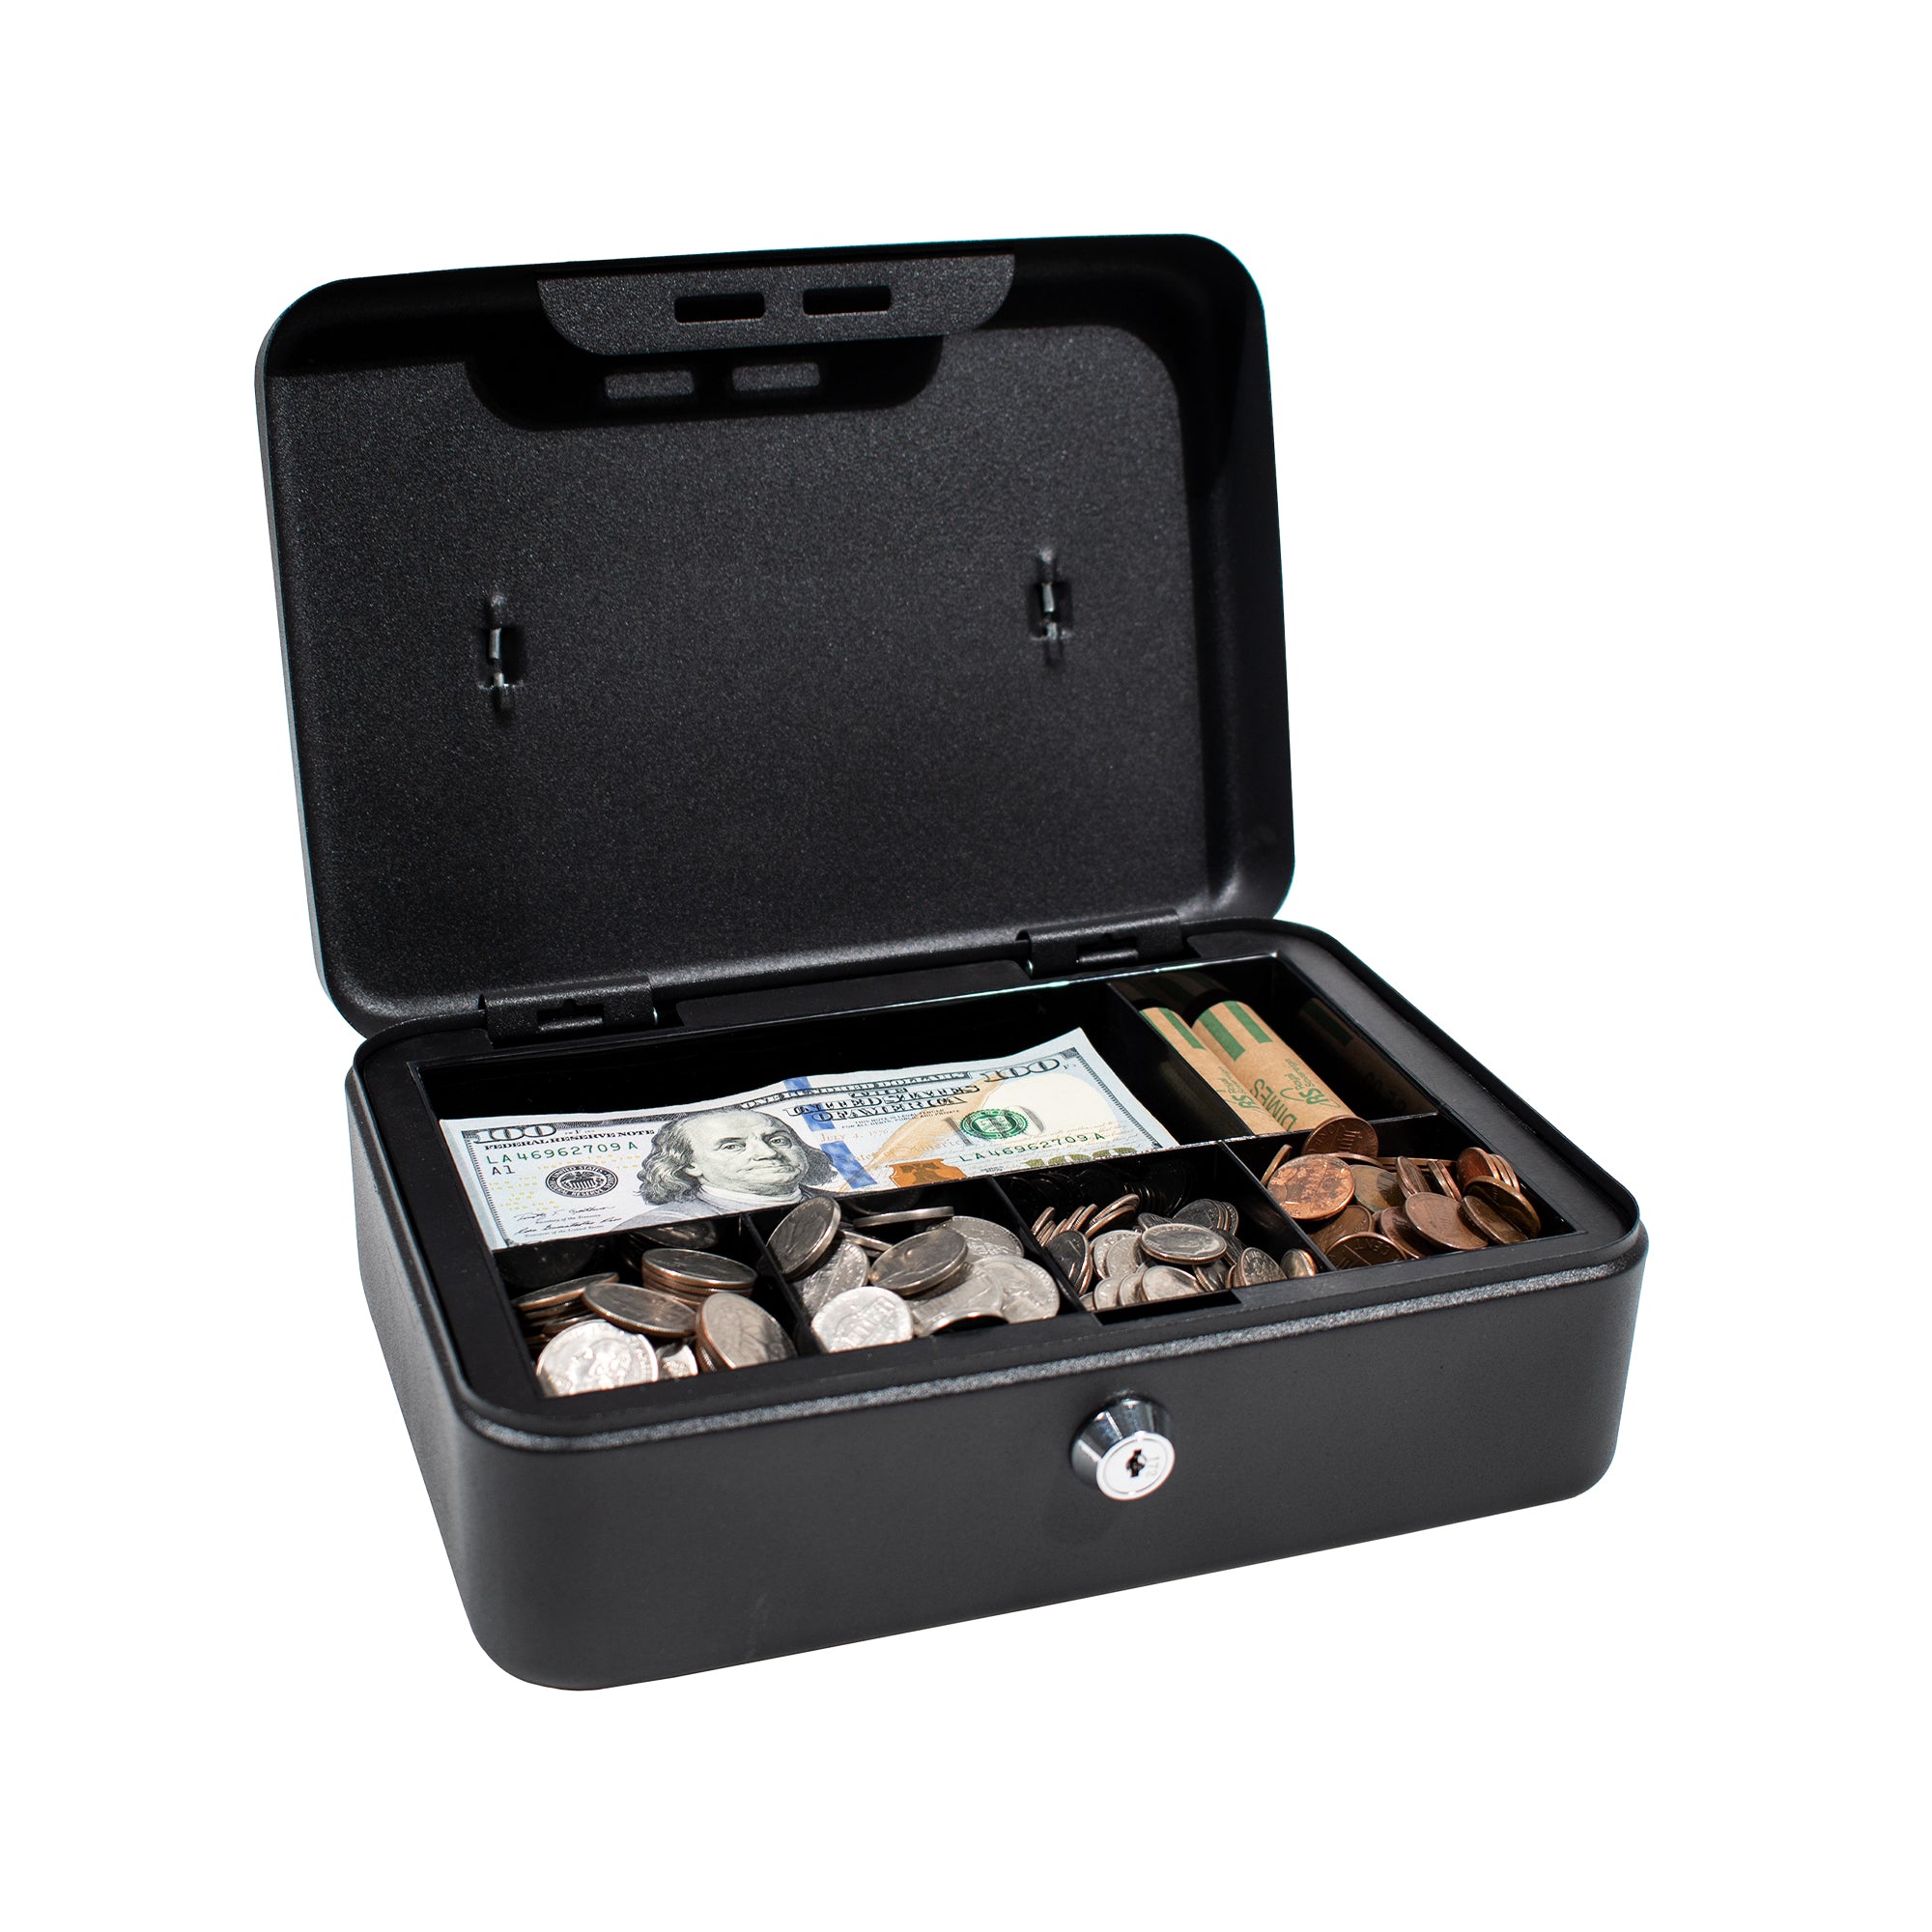 RSCB-200, Full-Size Cash Box, Extra Storage Tray